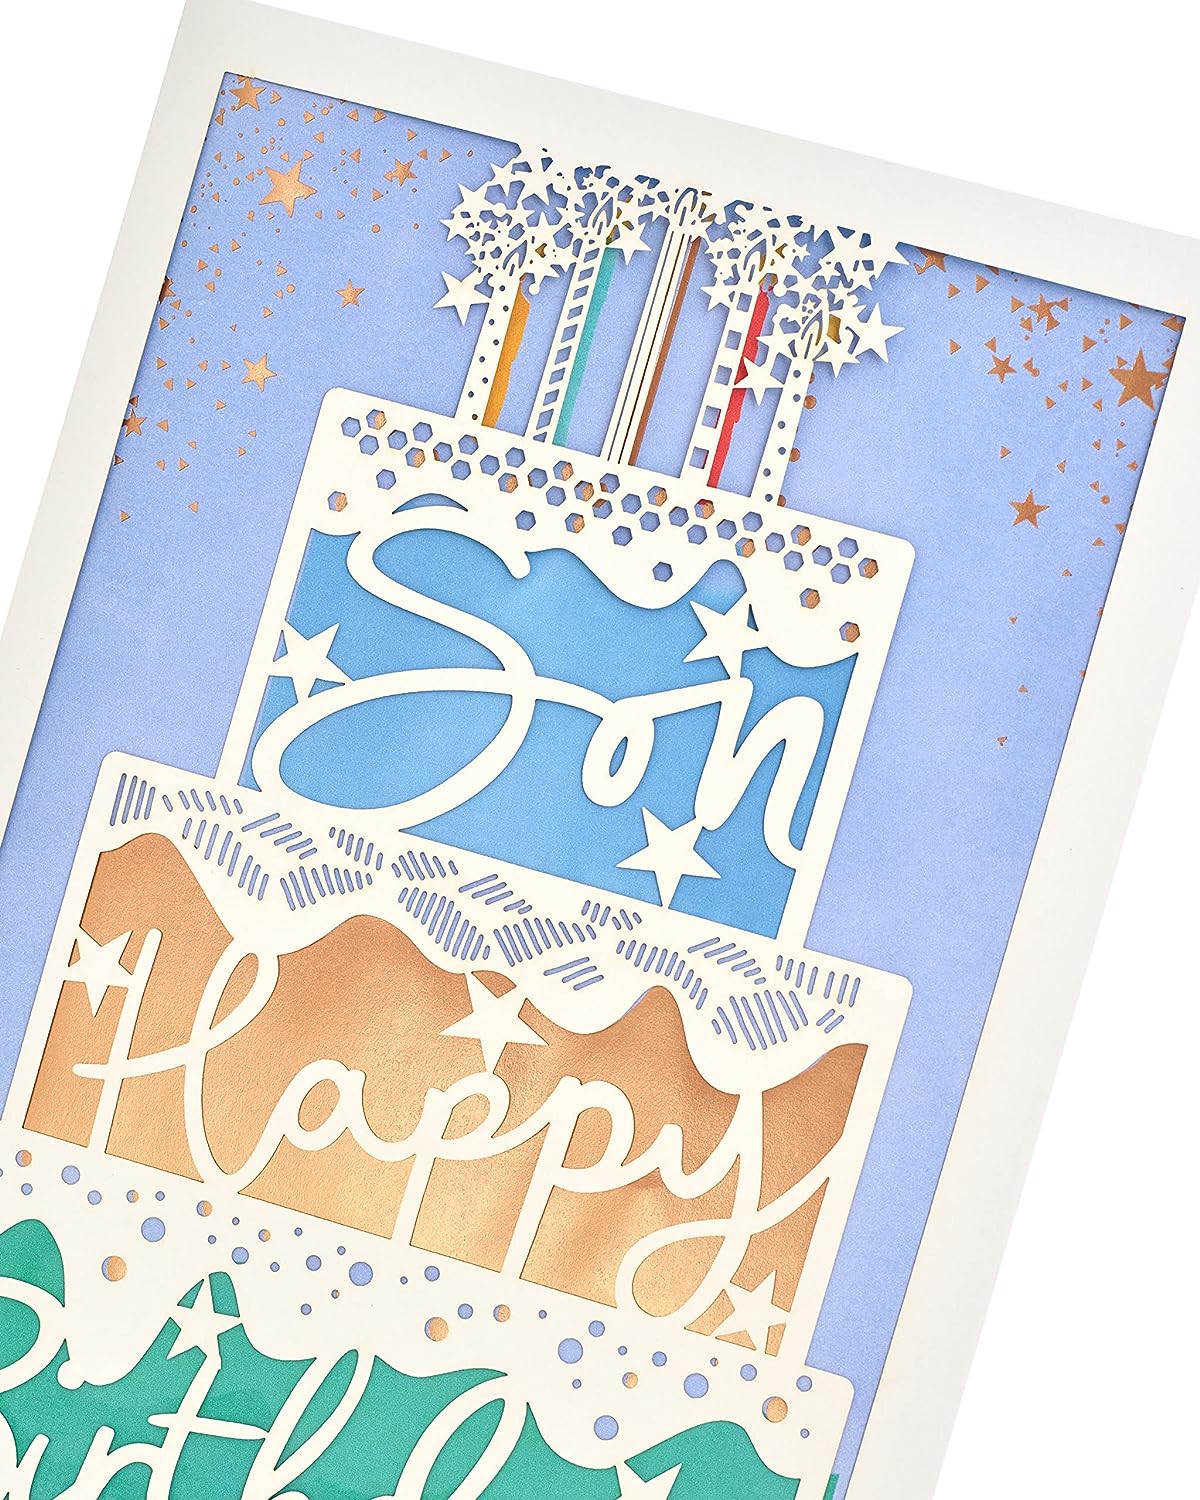 Laser Cut Cake Design Son Birthday Card